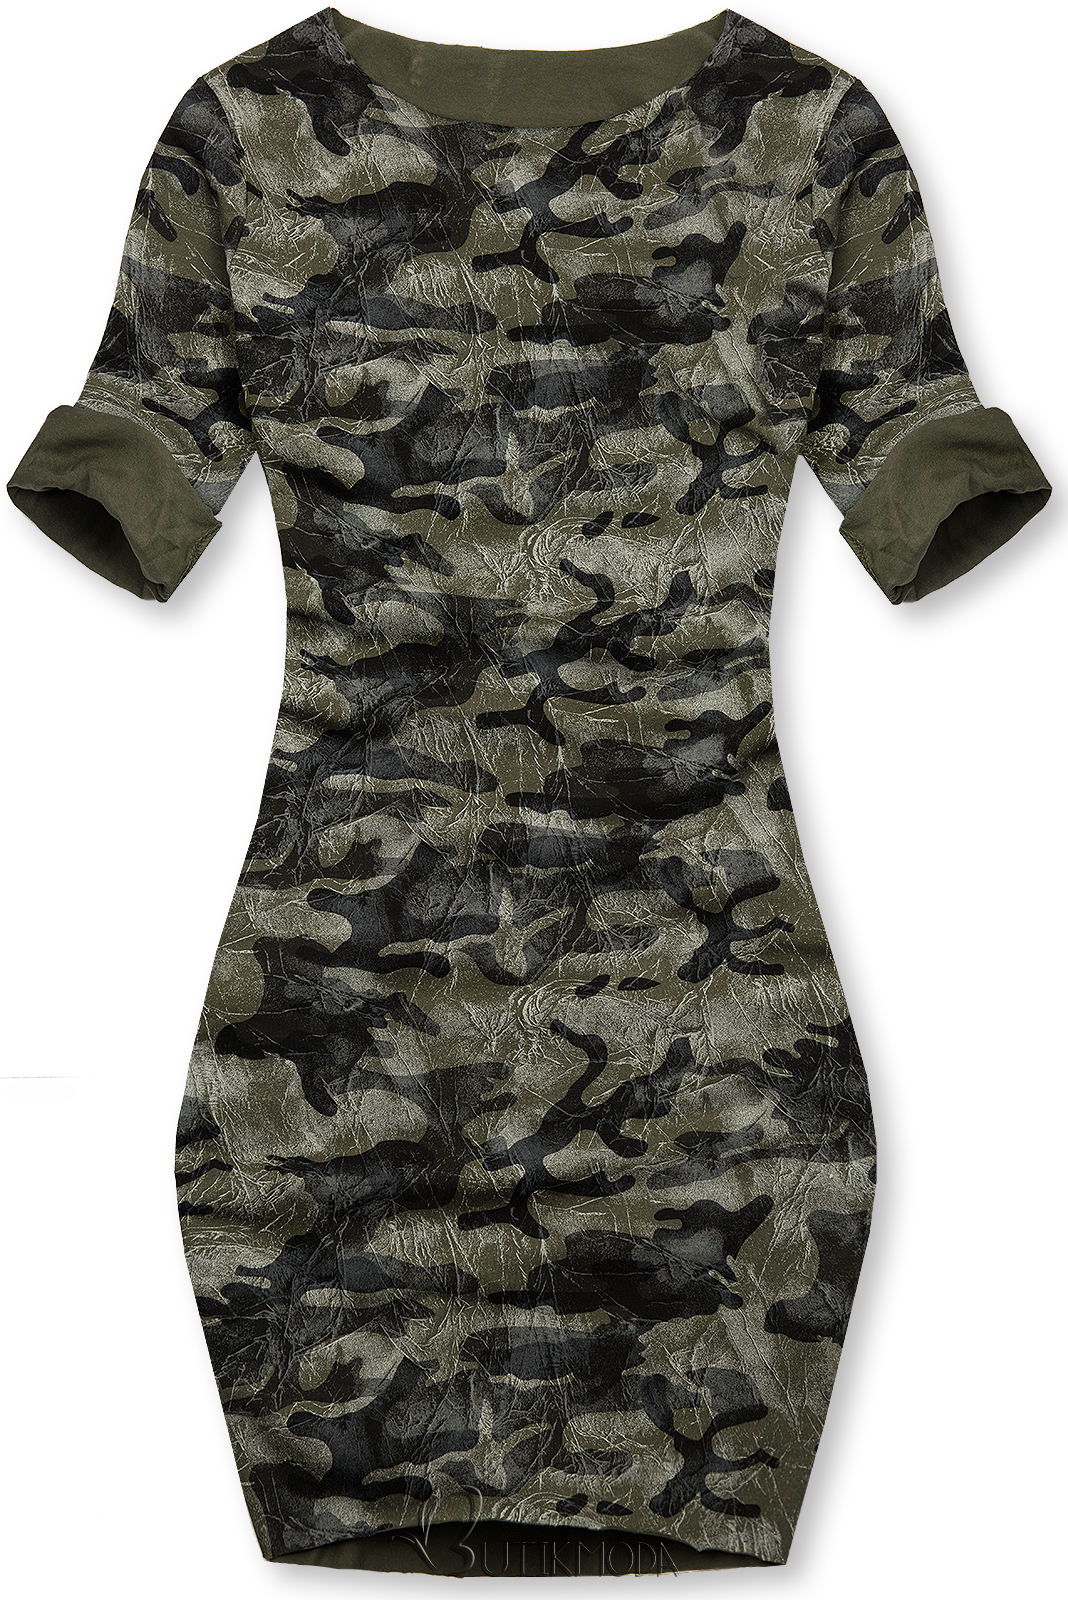 Lässiges Army Kleid khaki